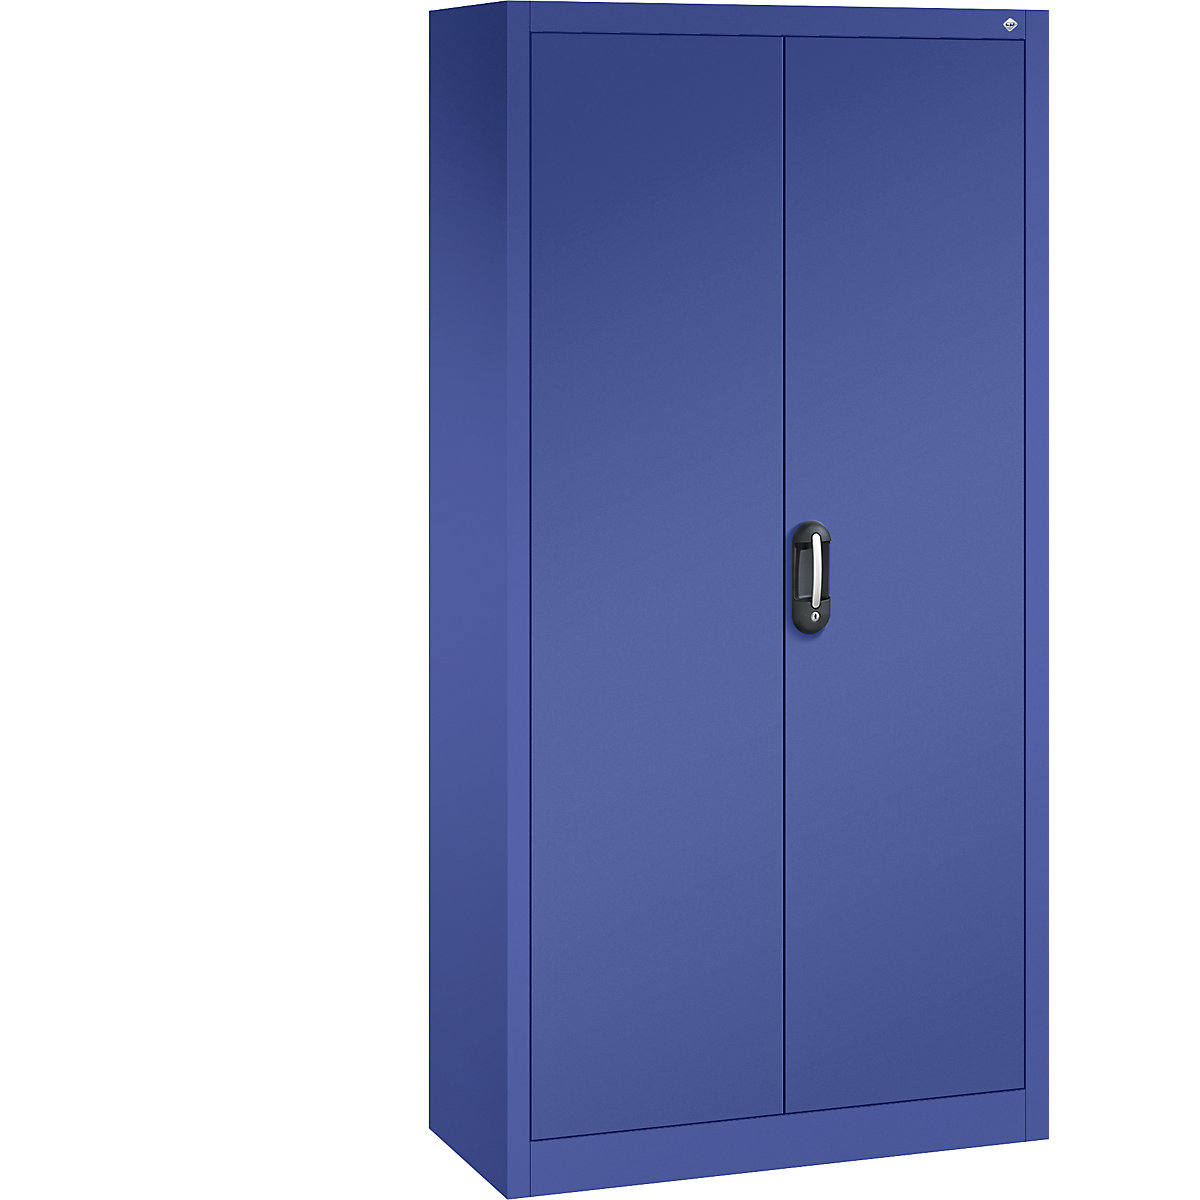 ACURADO universal cupboard – C+P, WxD 930 x 400 mm, lapis blue / lapis blue, 2+ items-19